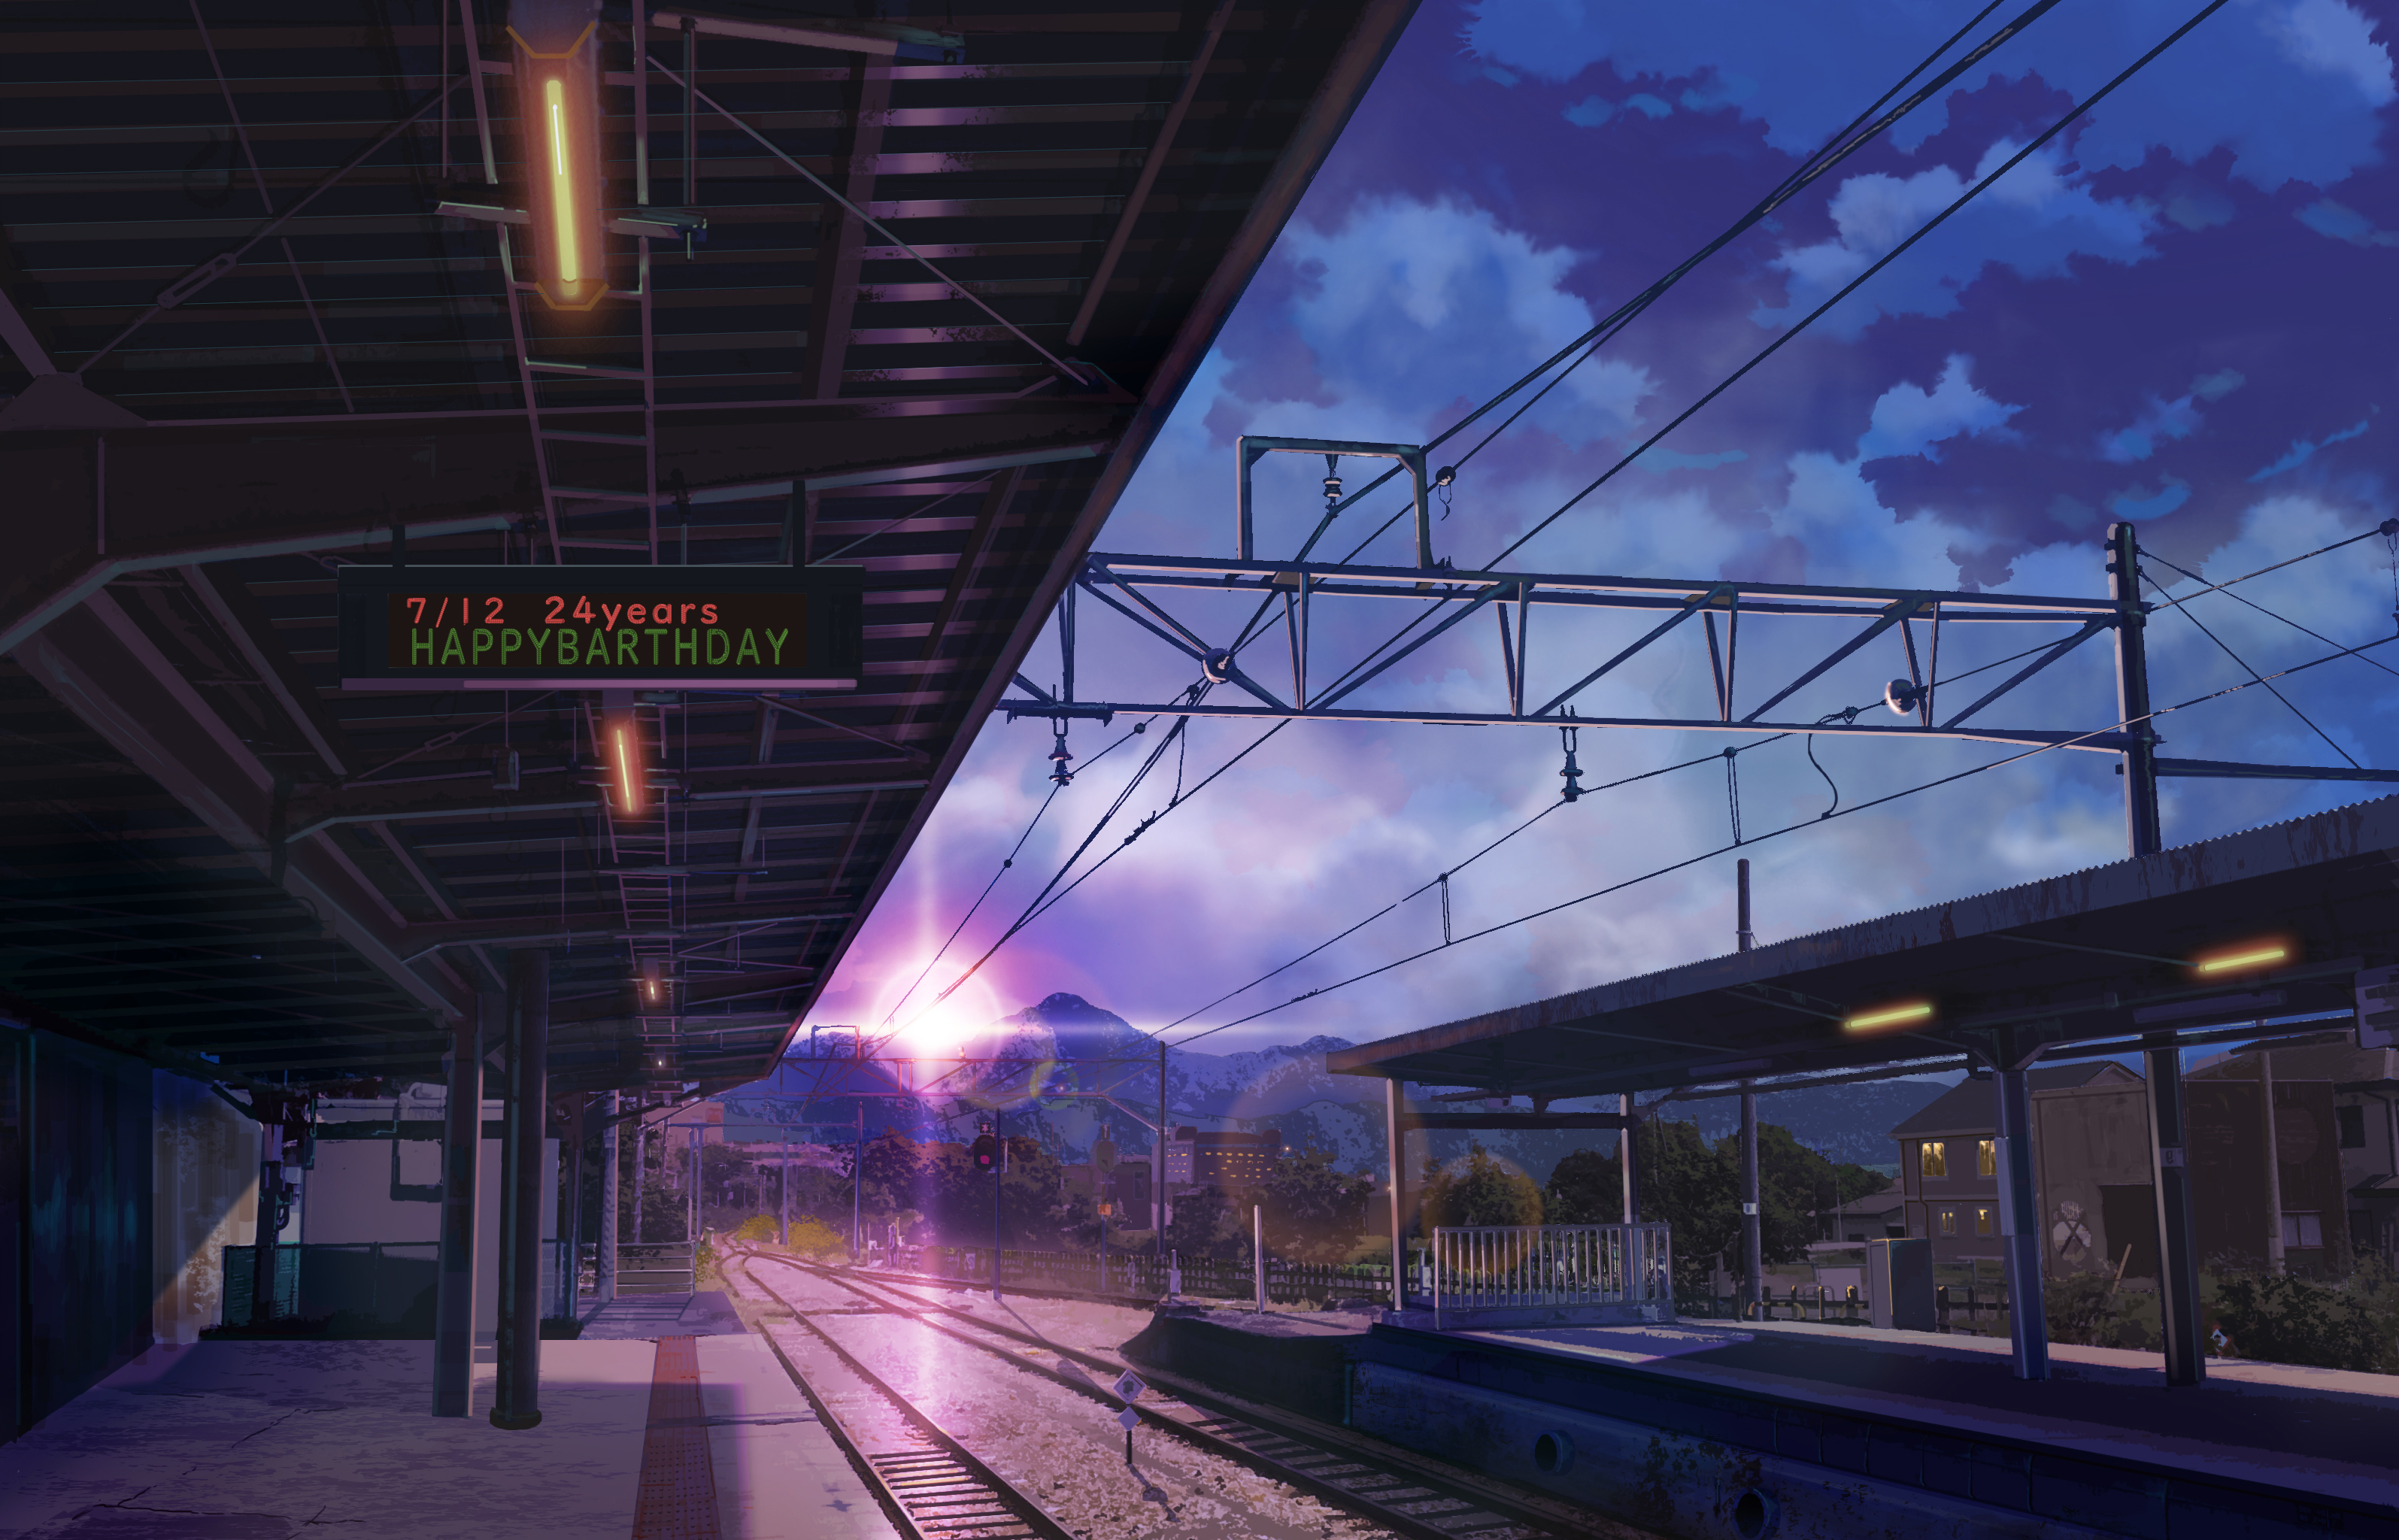 501833 1920x1080 anime winter lights train station train snow night 5  centimeters per second makoto shinkai wallpaper JPG 327 kB - Rare Gallery  HD Wallpapers